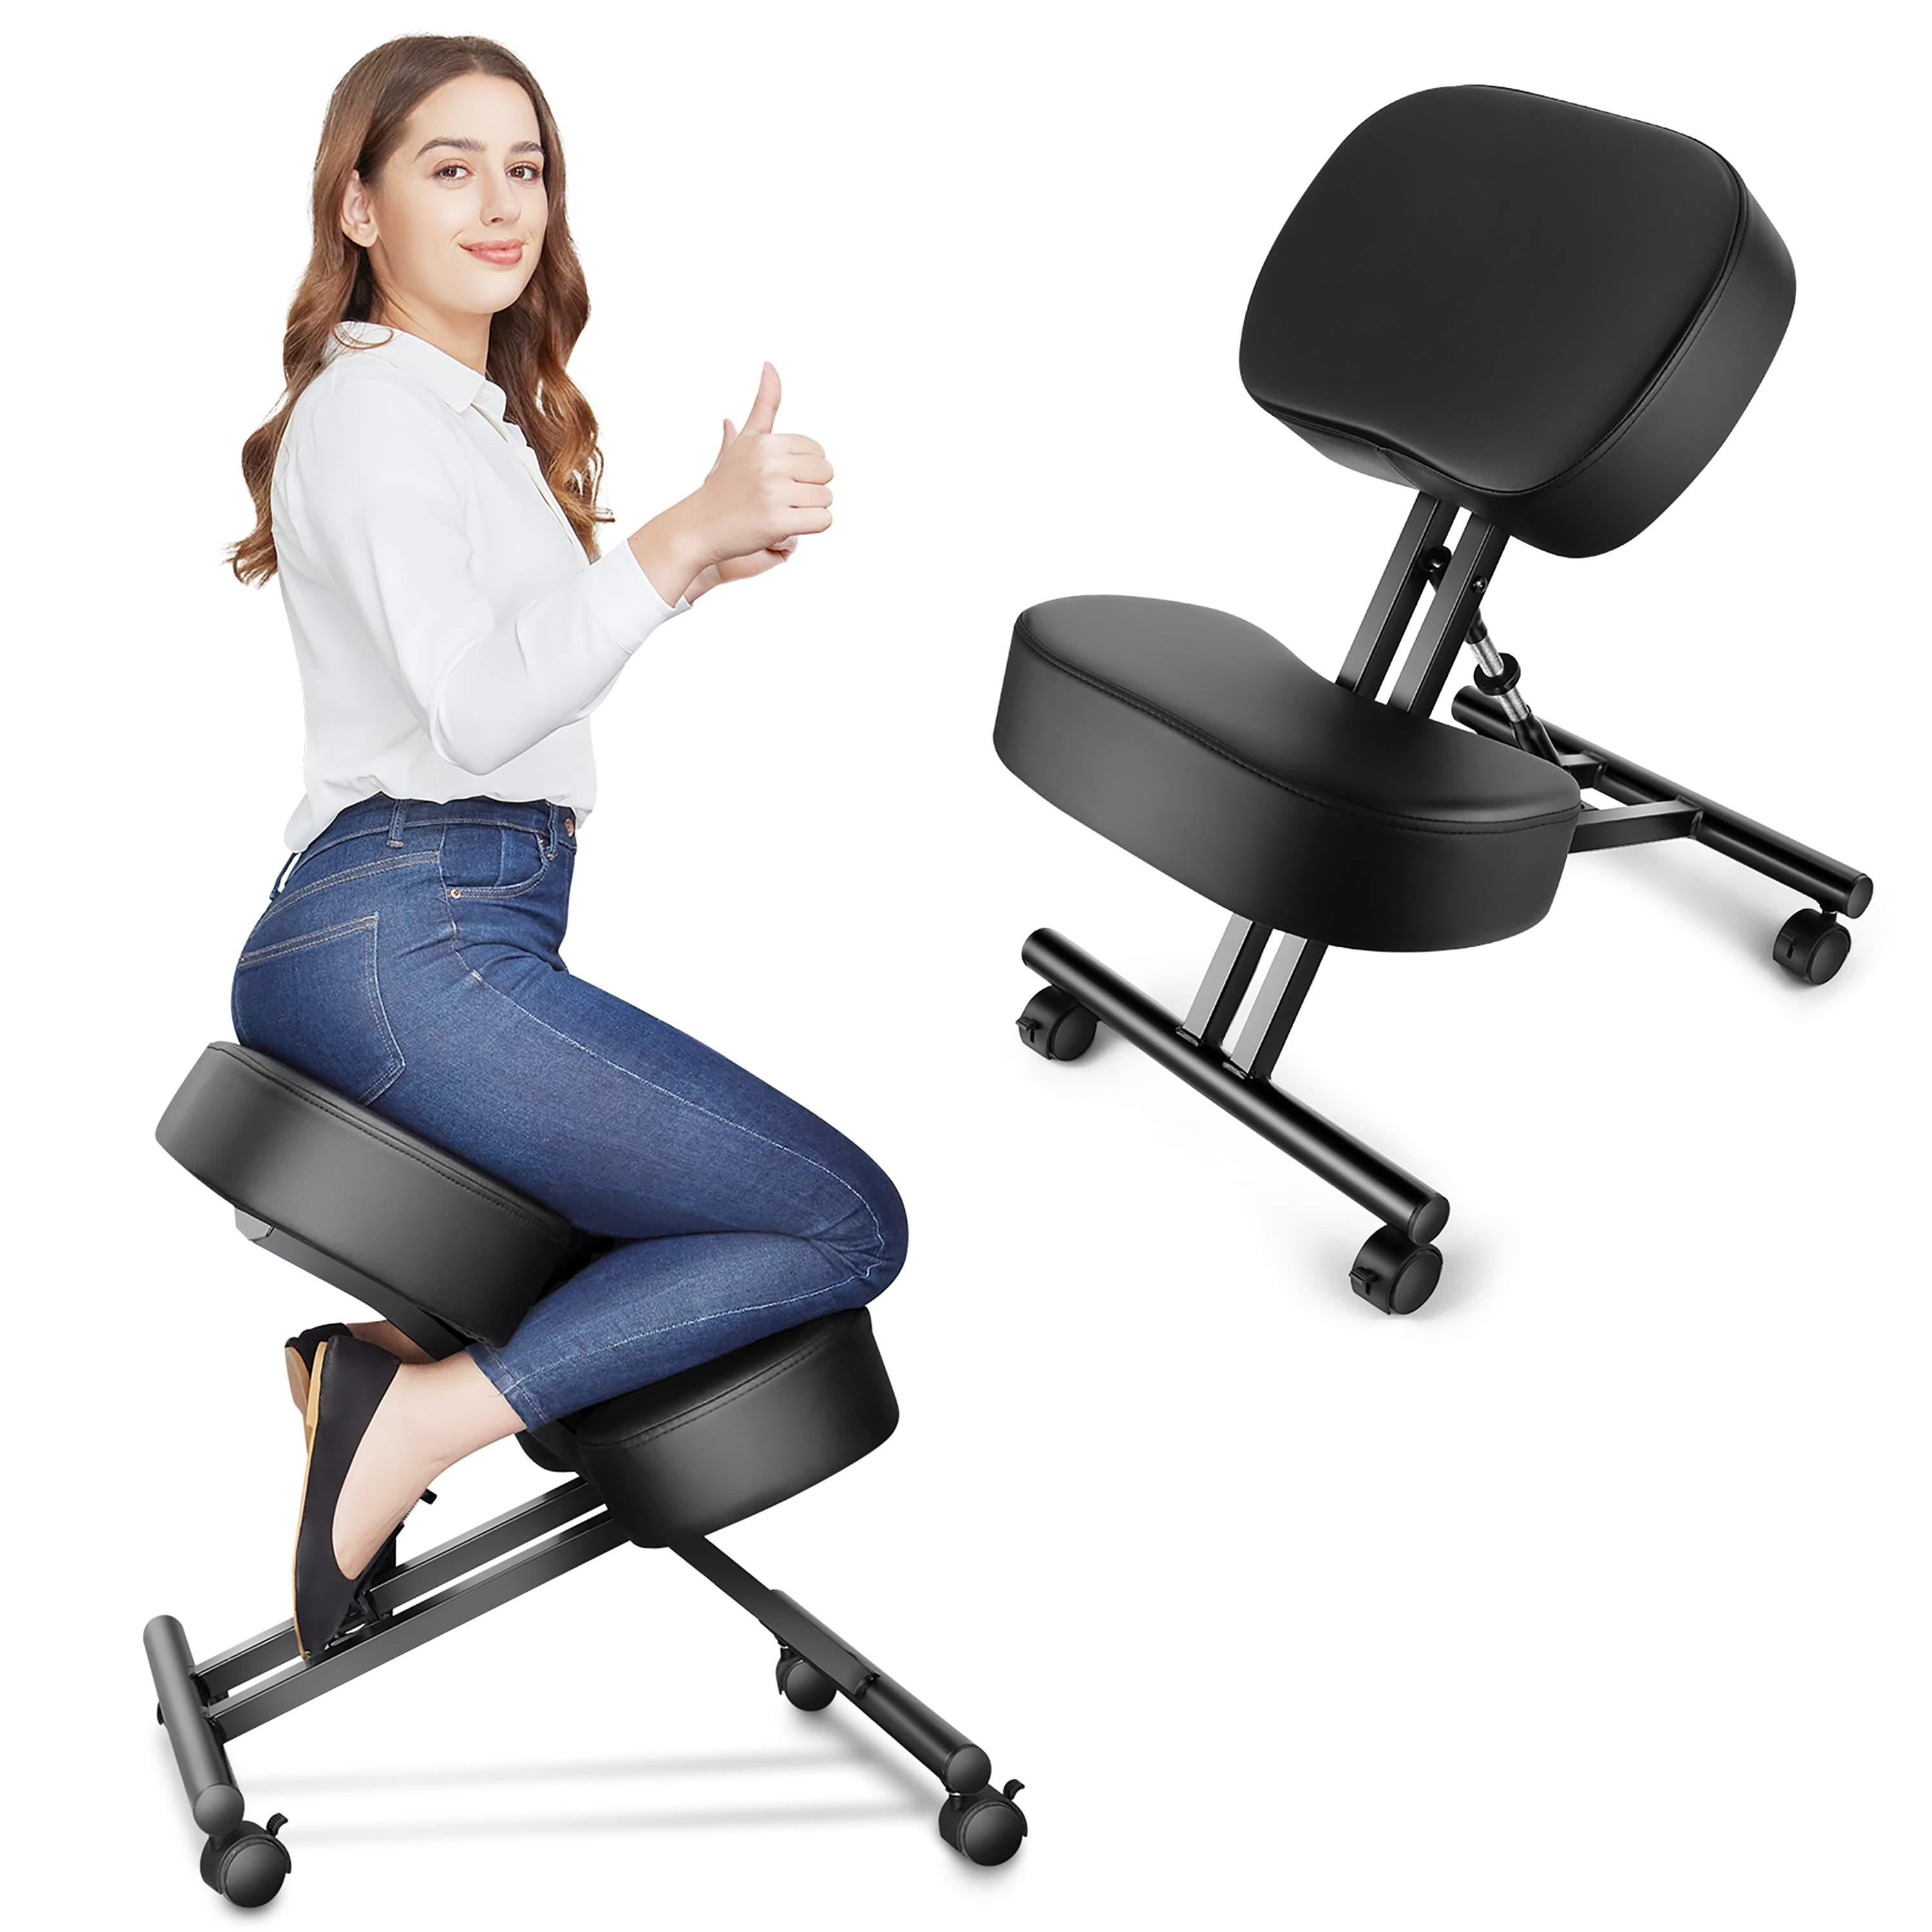 Kneeling Chair Orthopaedic Stool Ergonomic Posture for Office Home Frame Seat 